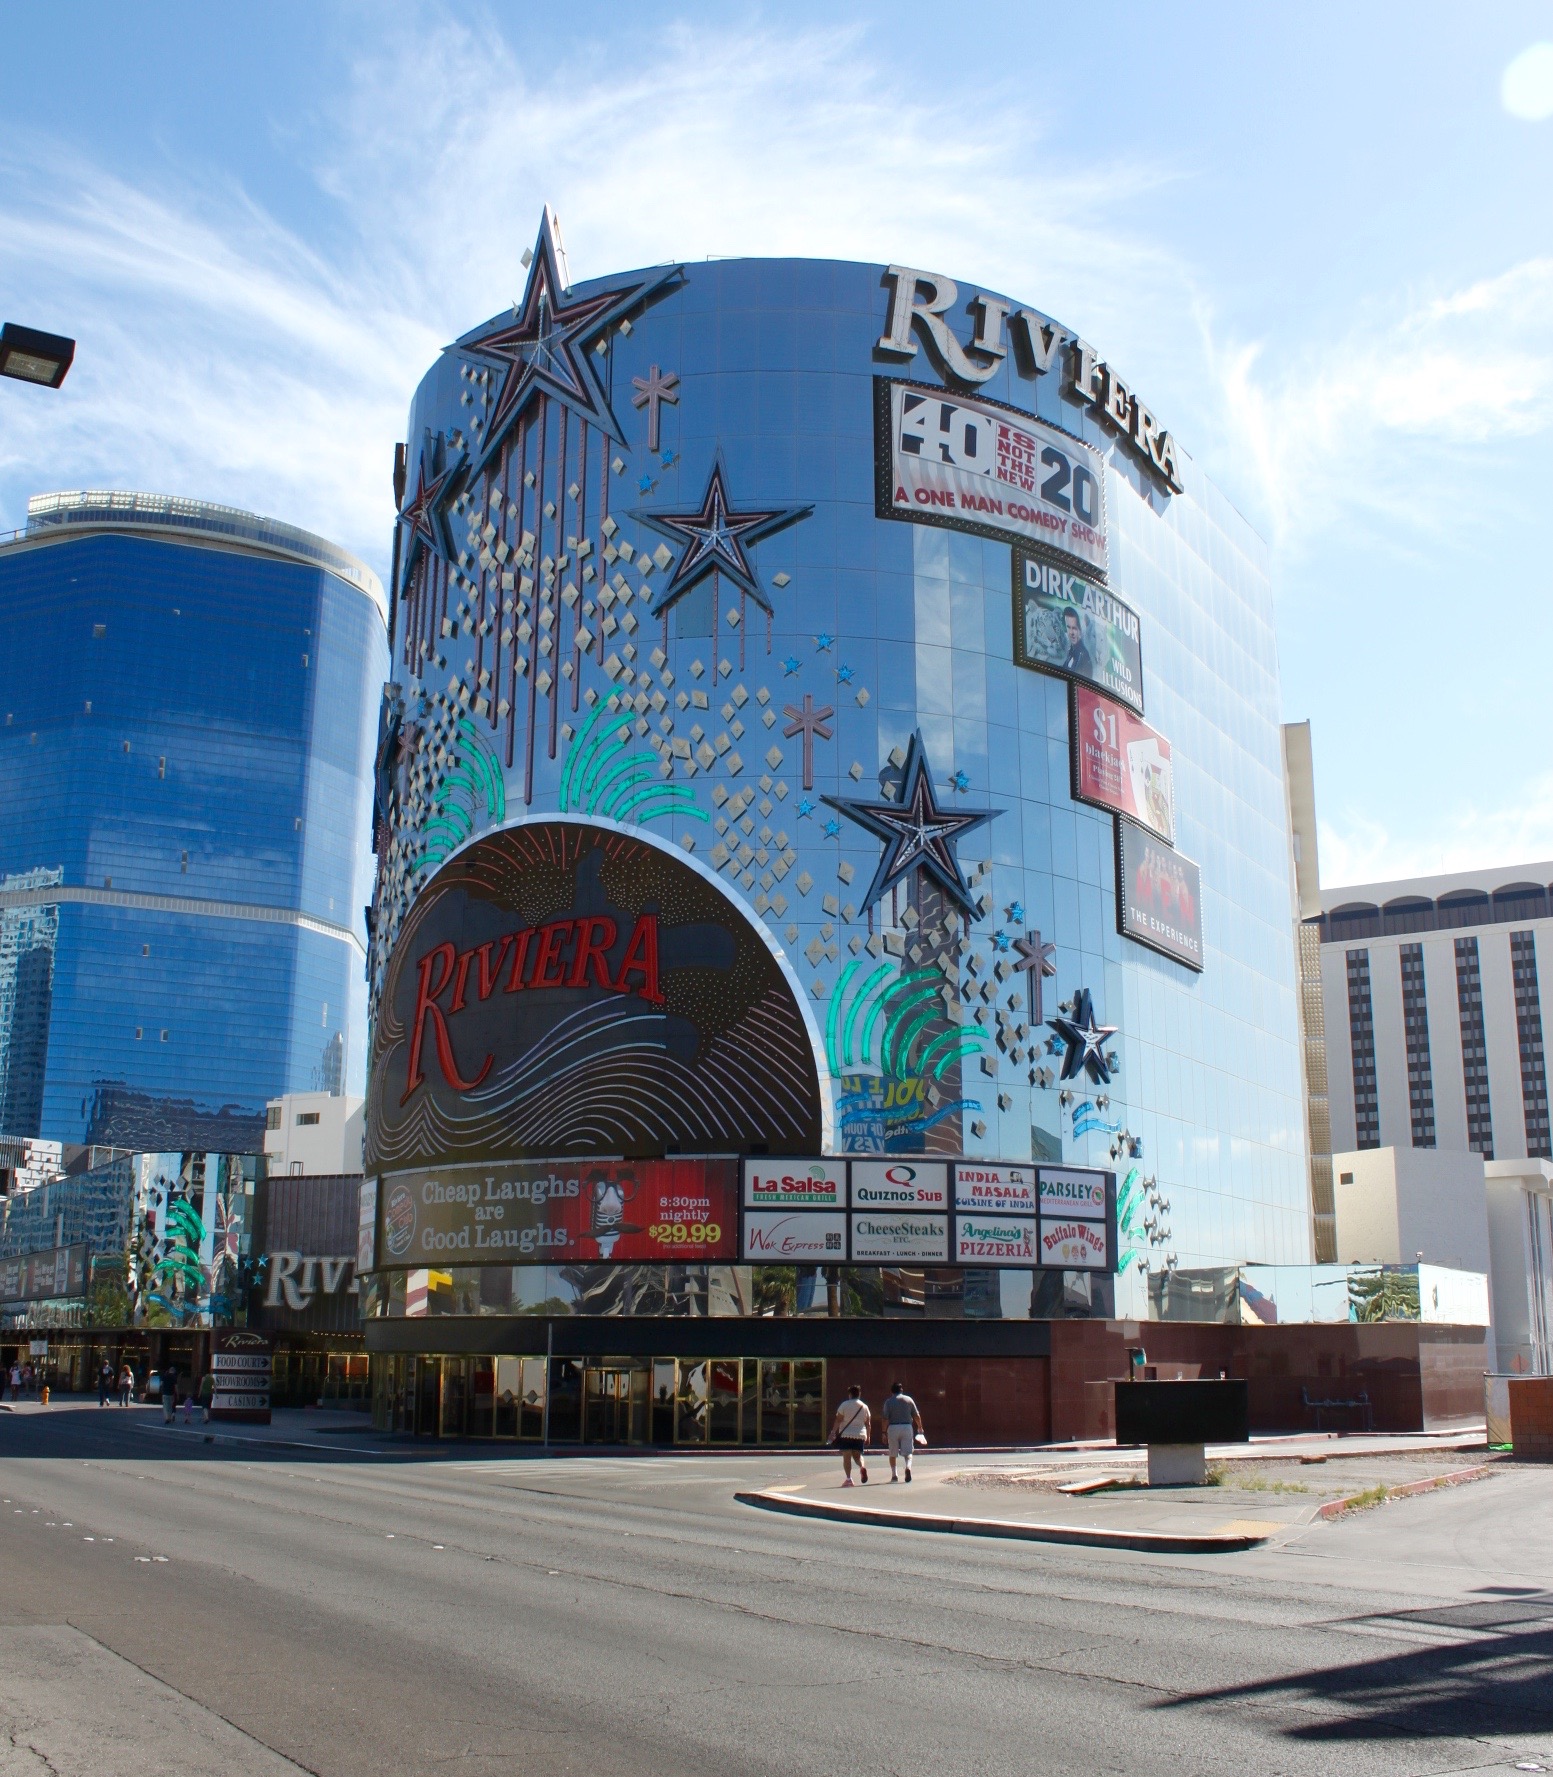 Hotel RIVIERA Las Vegas 1955-2015